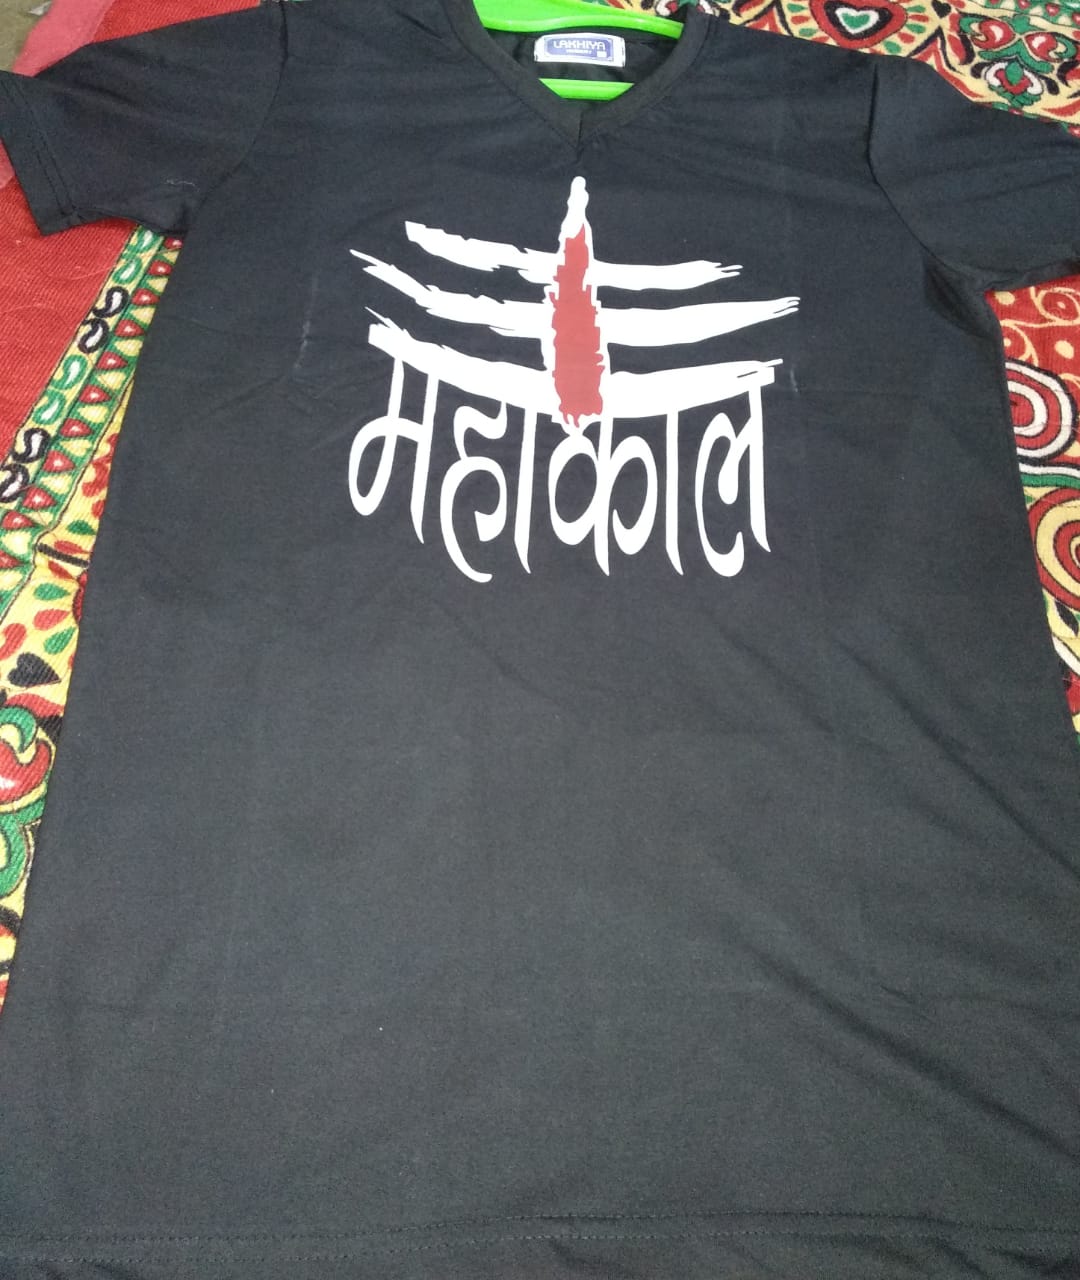 Buy Digital Printed Mahakal T-Shirt (Black) Online @ ₹299 from ShopClues